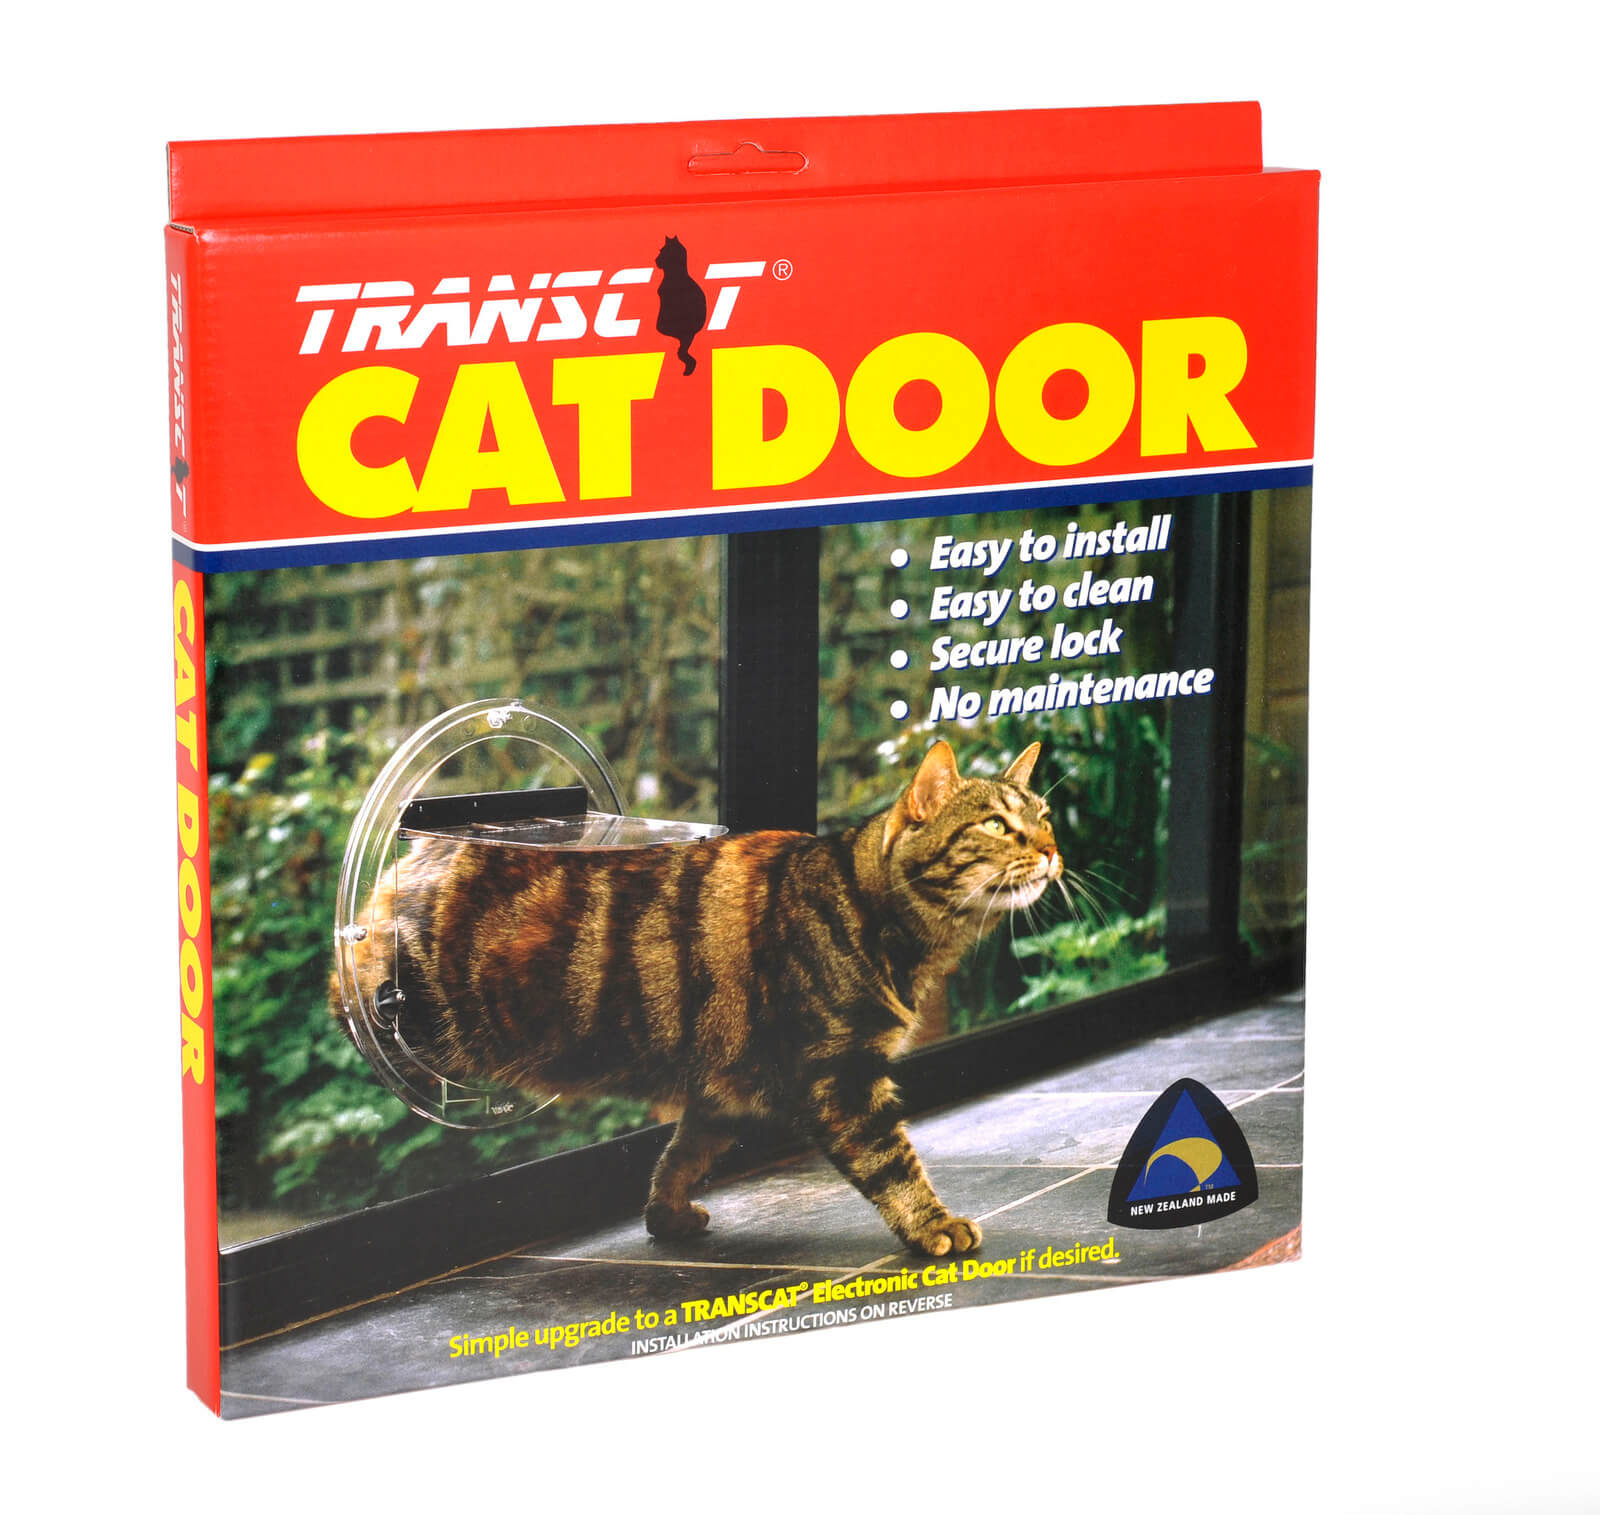 Transcat brand cat door box on white background